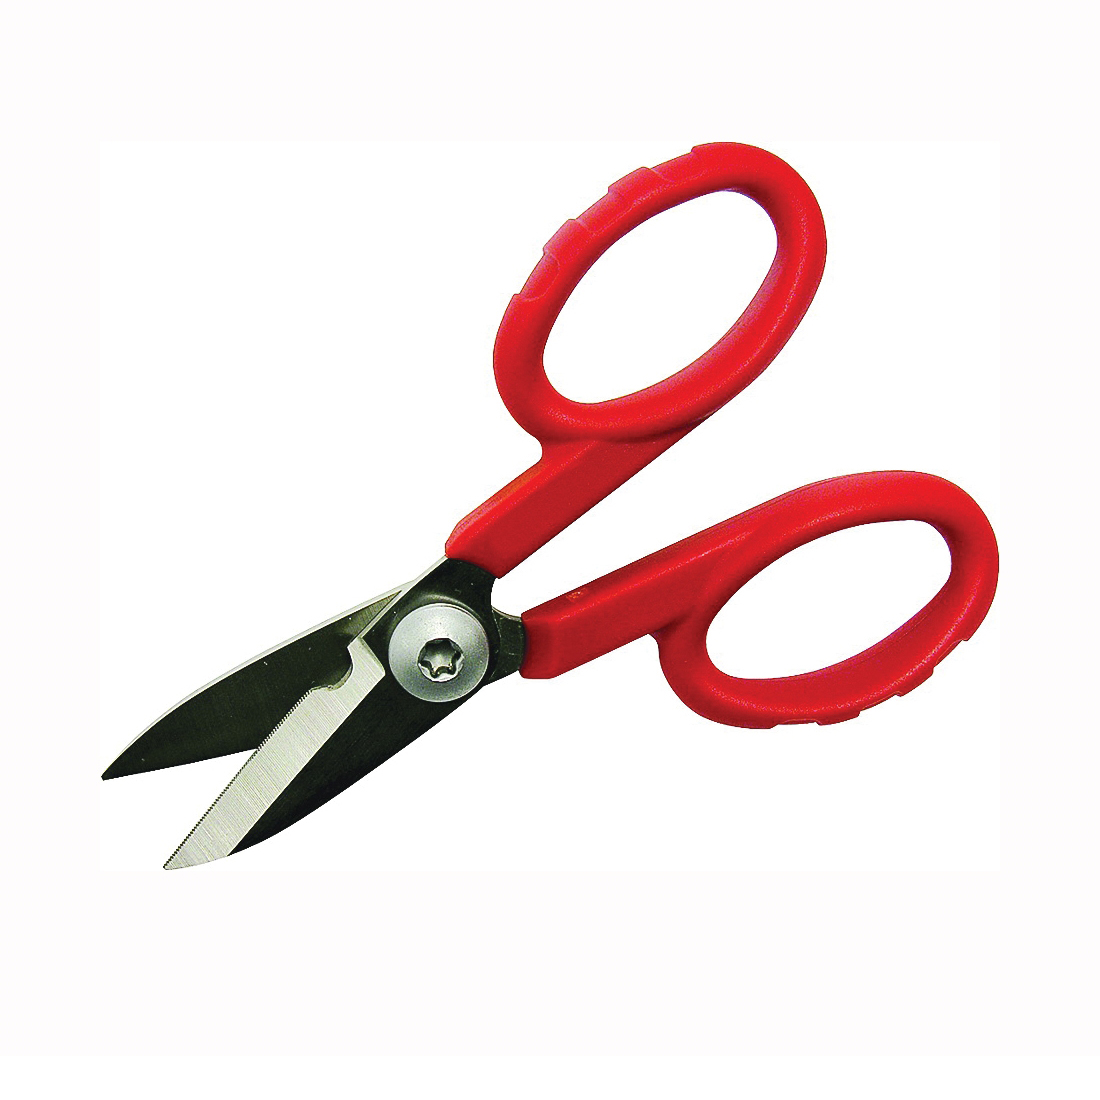 ES-360 Electrician Scissor/Cutter, 5-1/2 in OAL, 1-5/8 in L Cut, Stainless Steel Blade, Red Handle